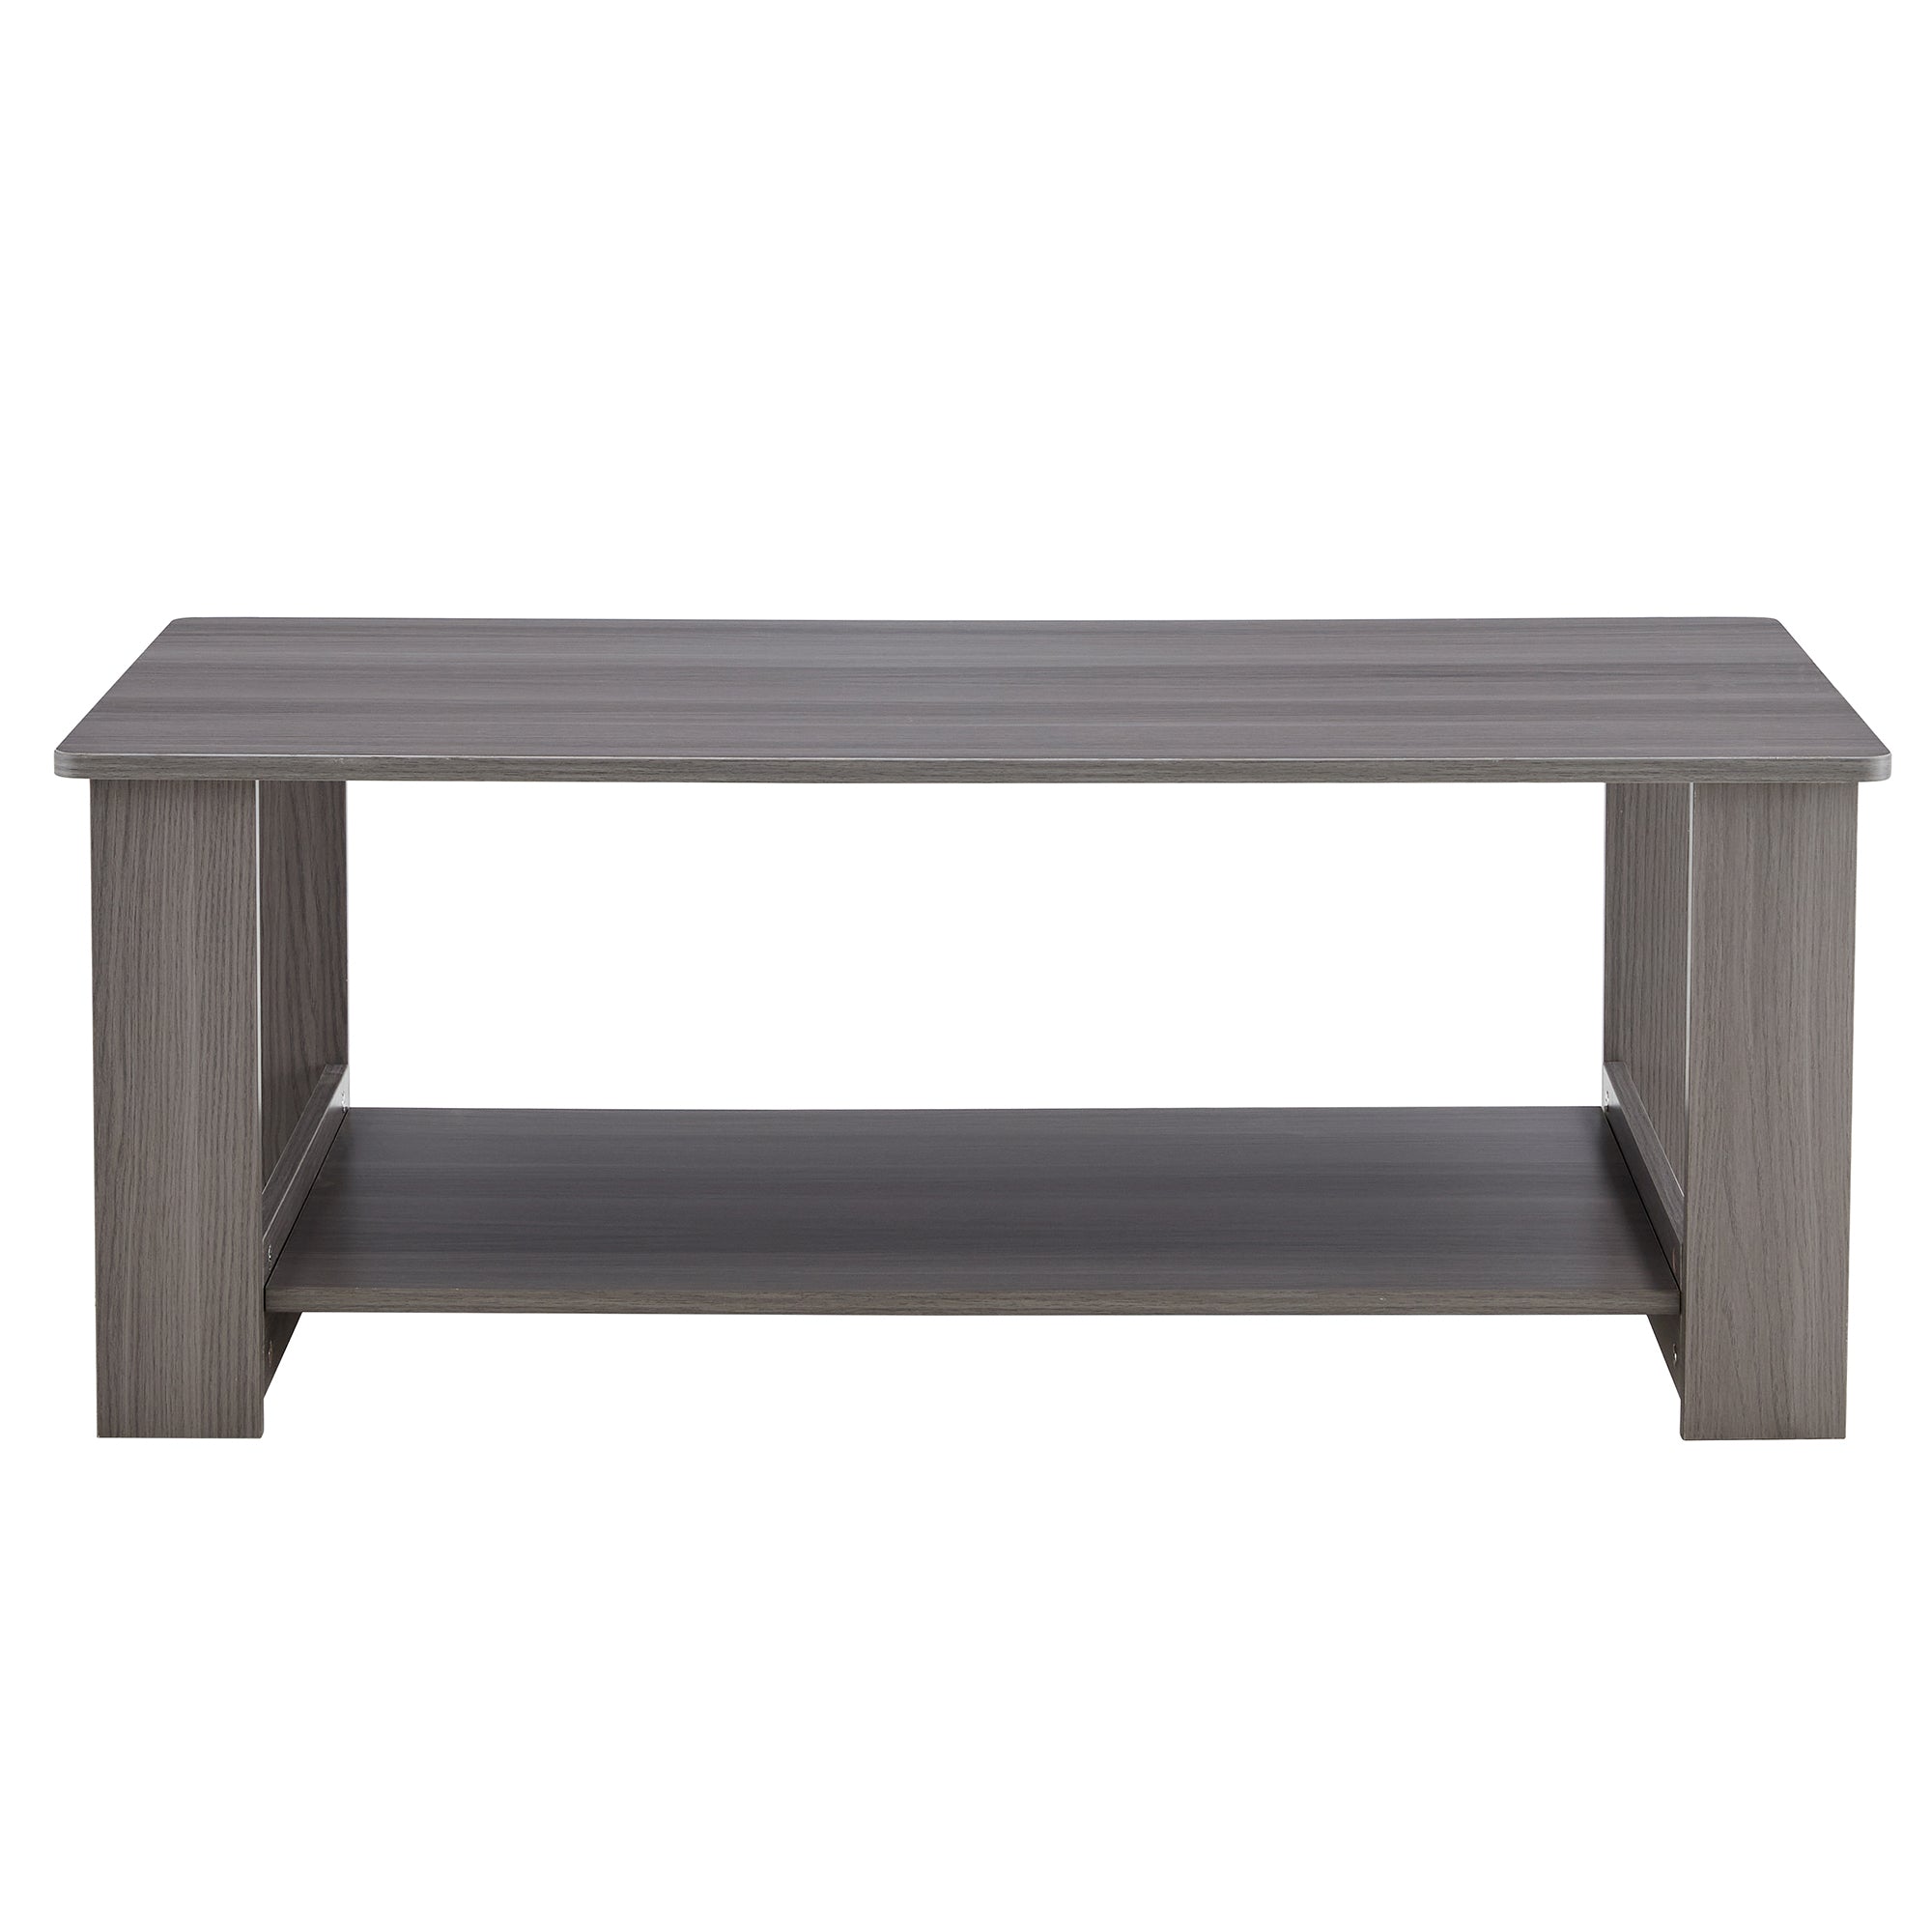 43" Modern Gray Coffee Table with Undershelf